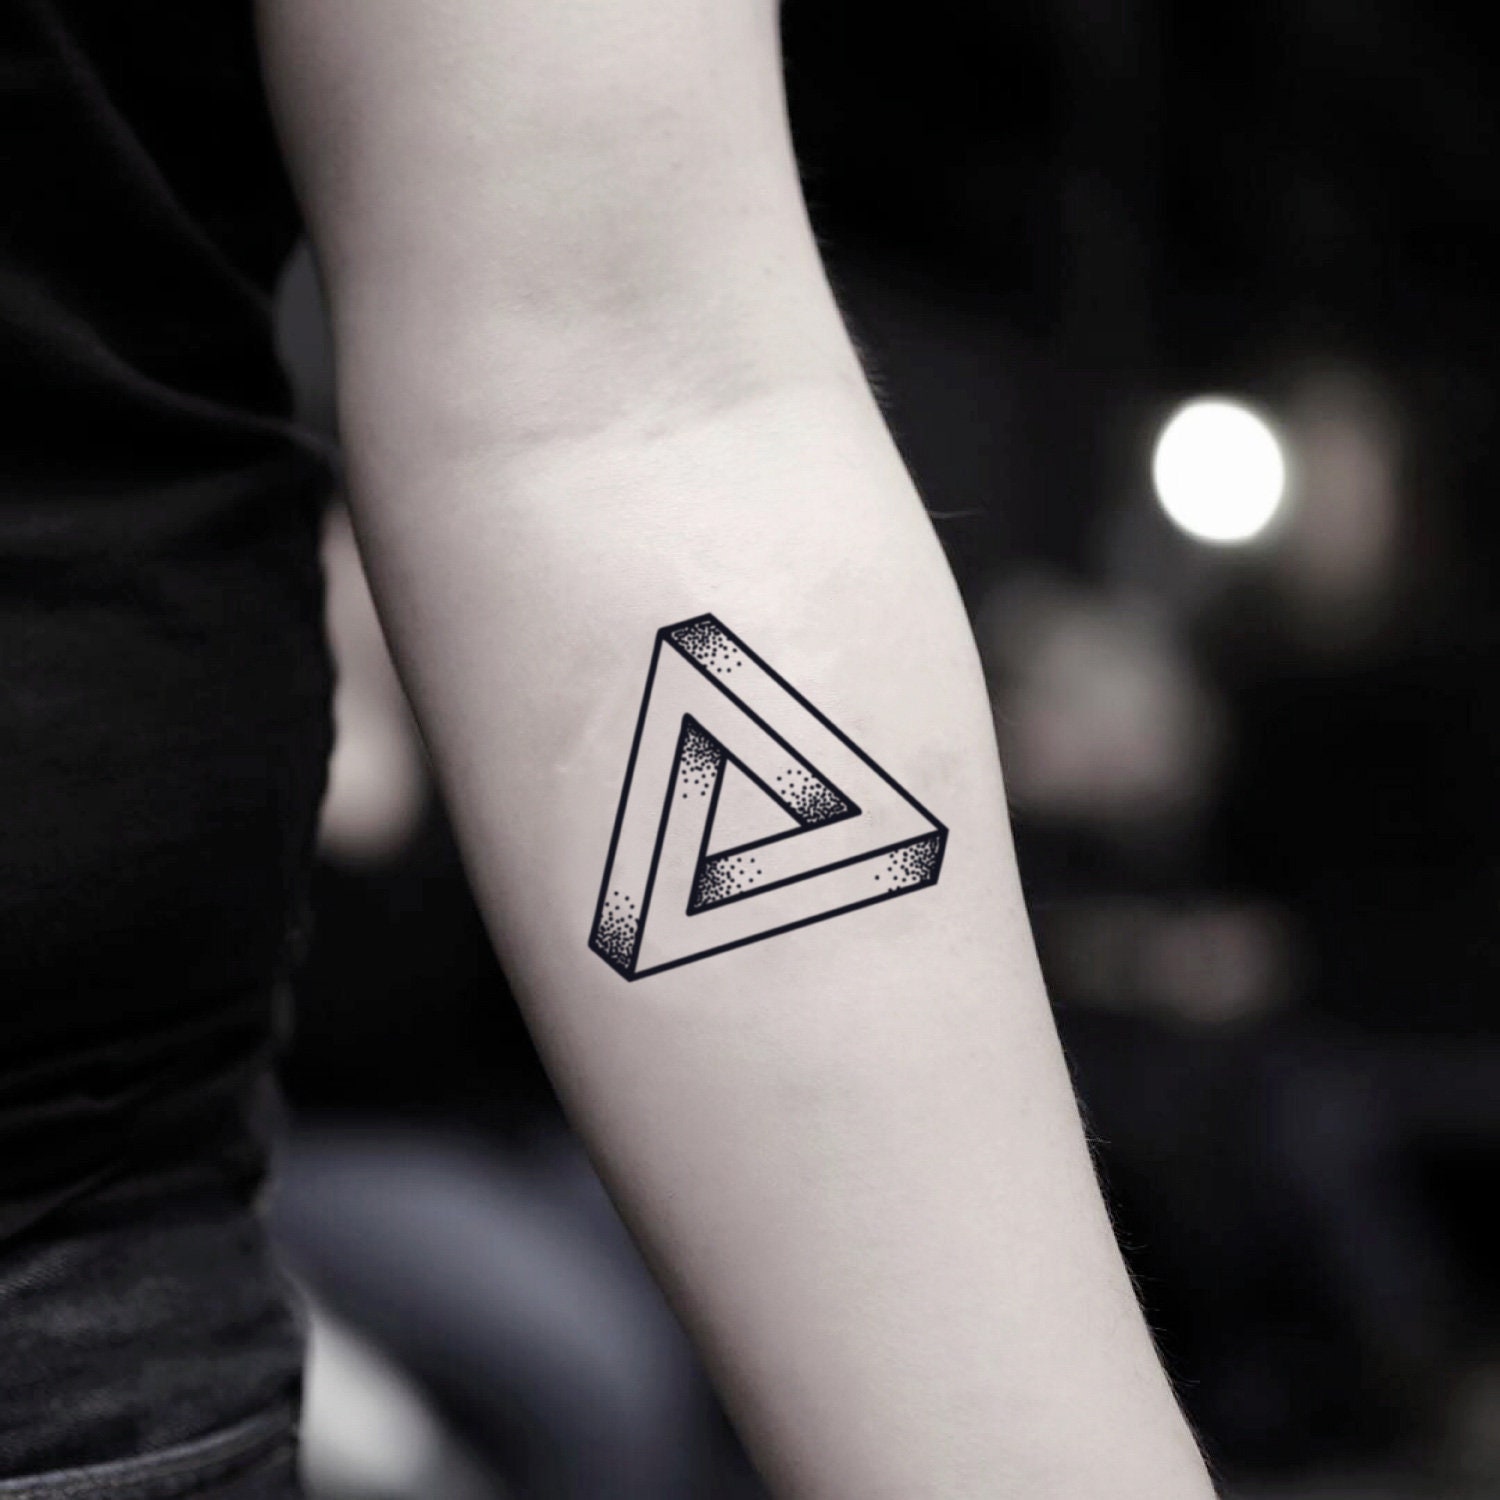 Penrose triangle tattoo on the left shoulder blade.